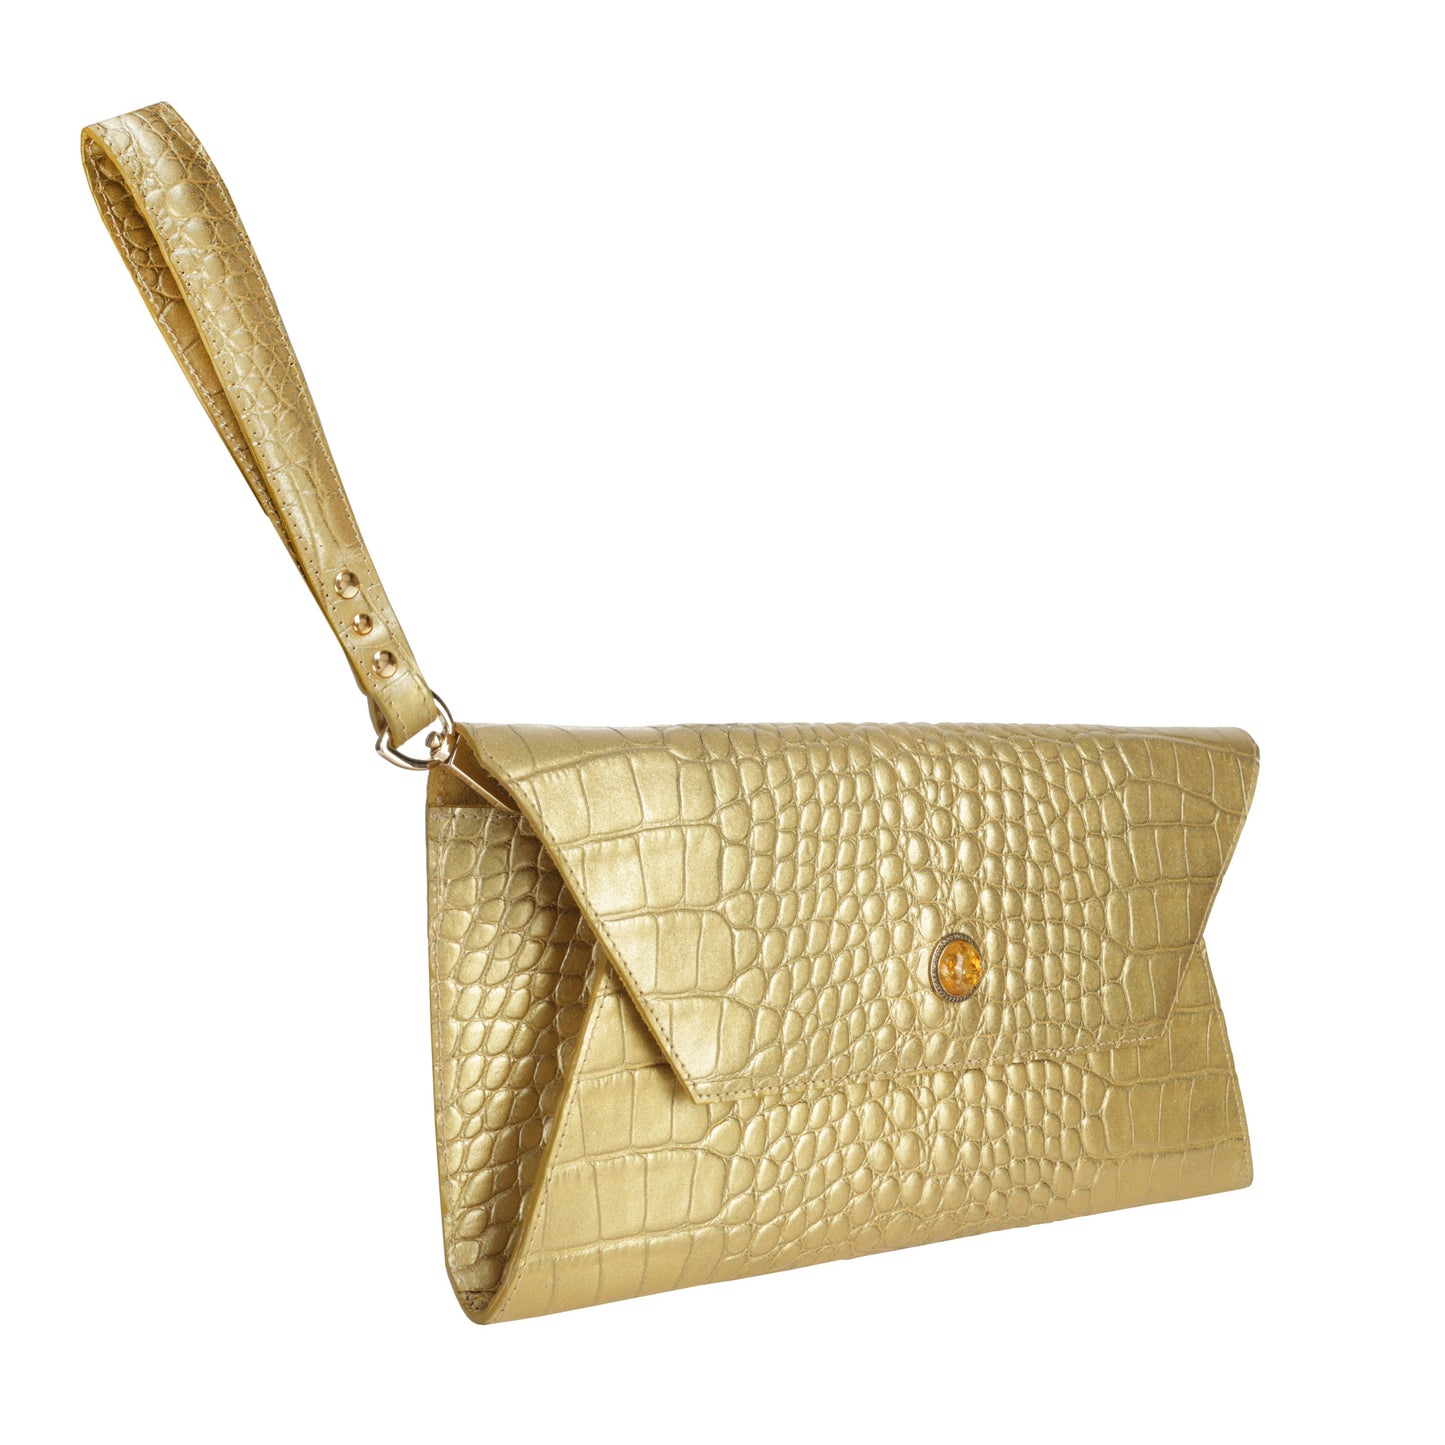 NEFRE GOLD women's clutch bag